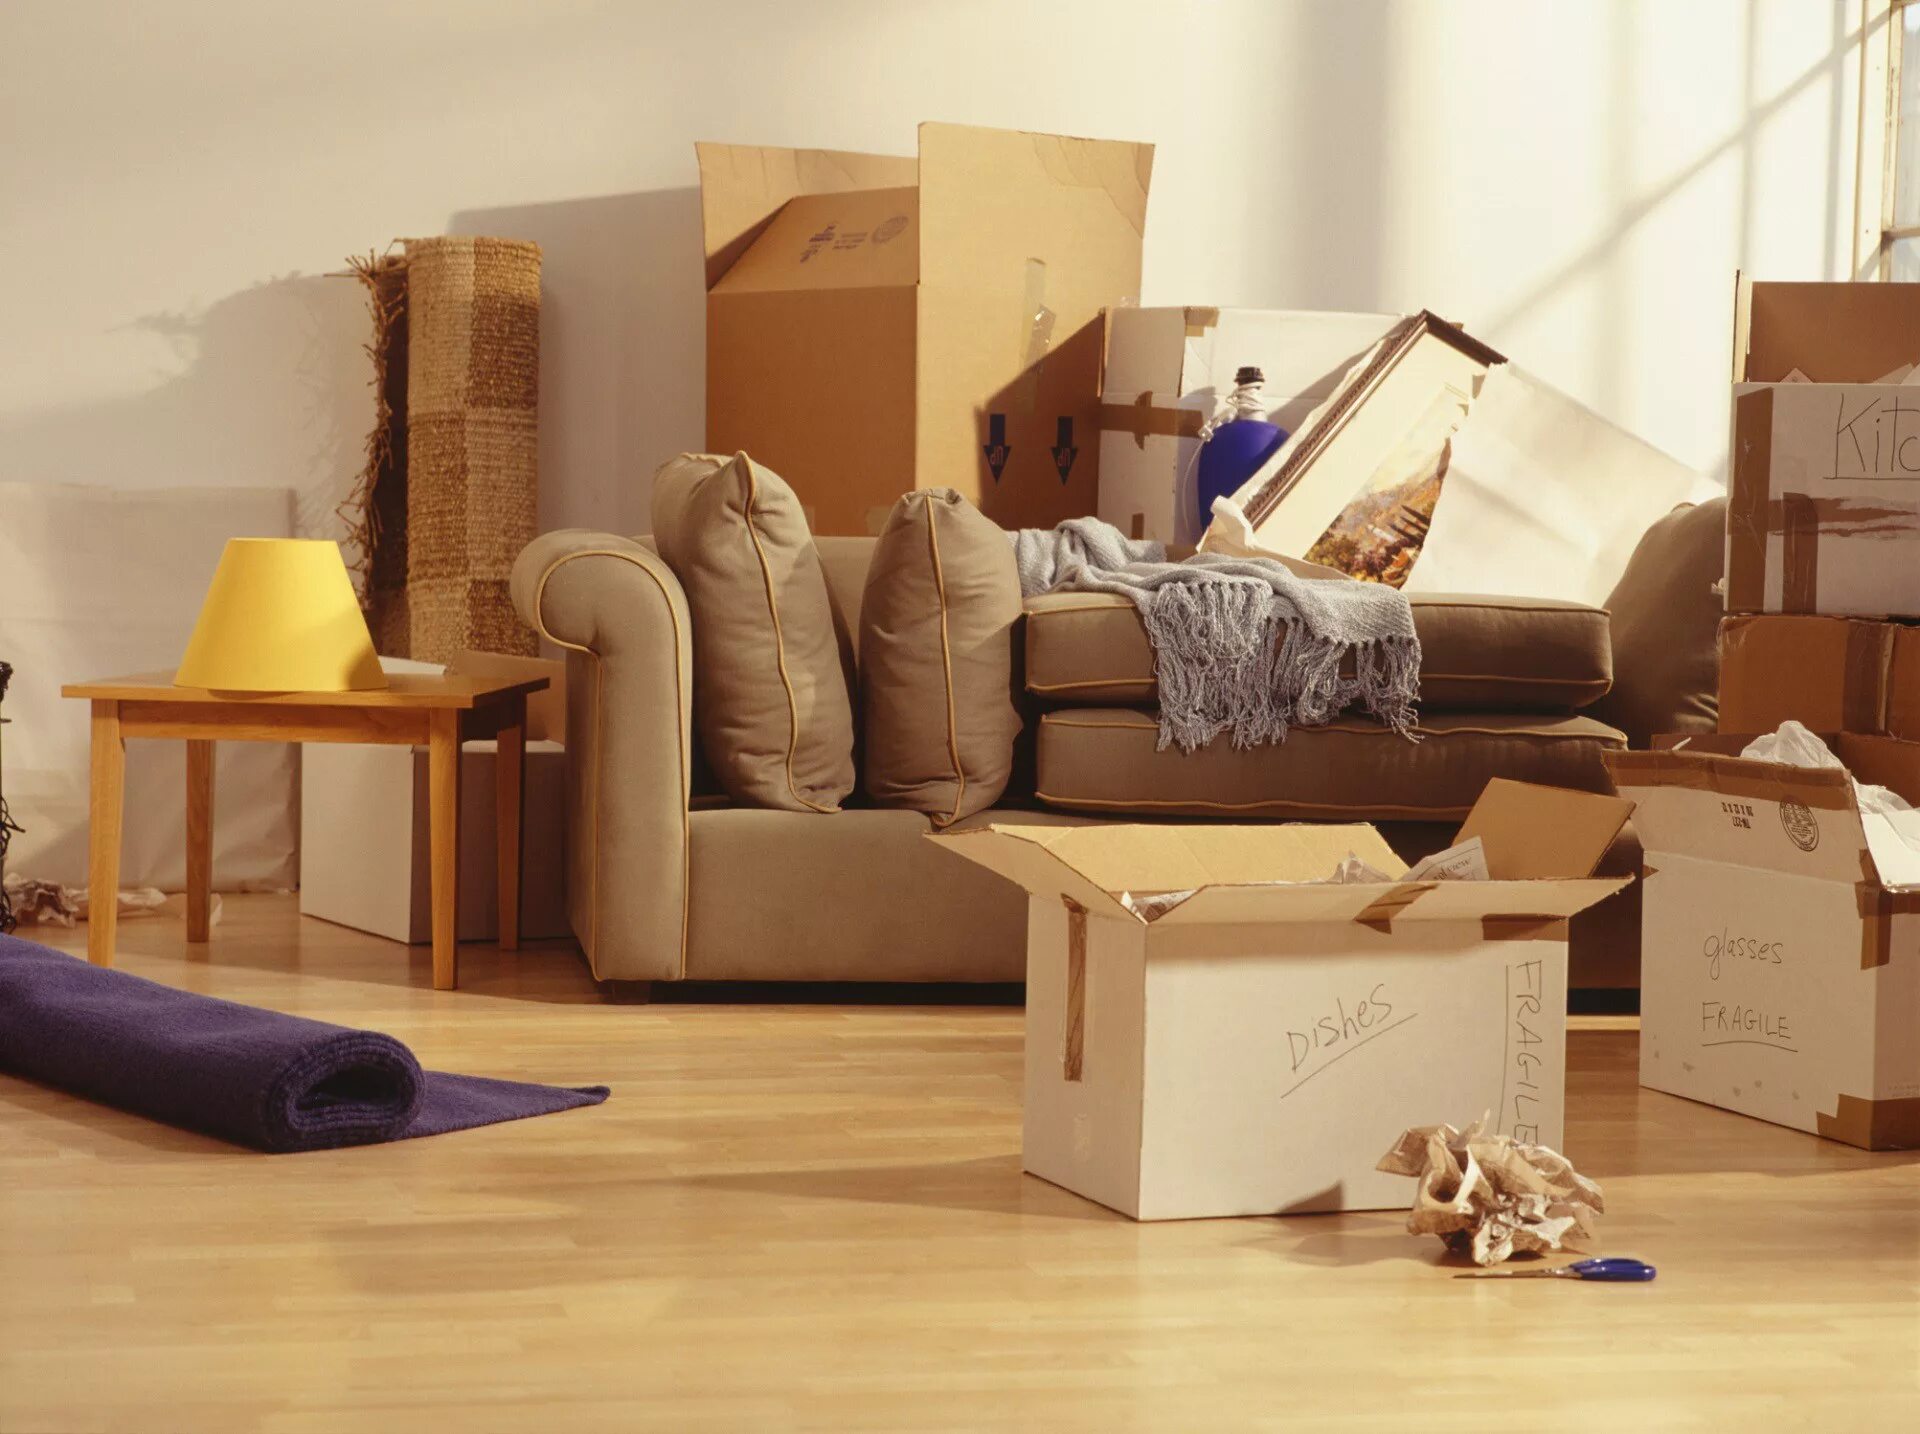 Move package. Упаковка мебели. Коробки в квартире. Упаковка вещей для переезда. Красивая упаковка для мебели.